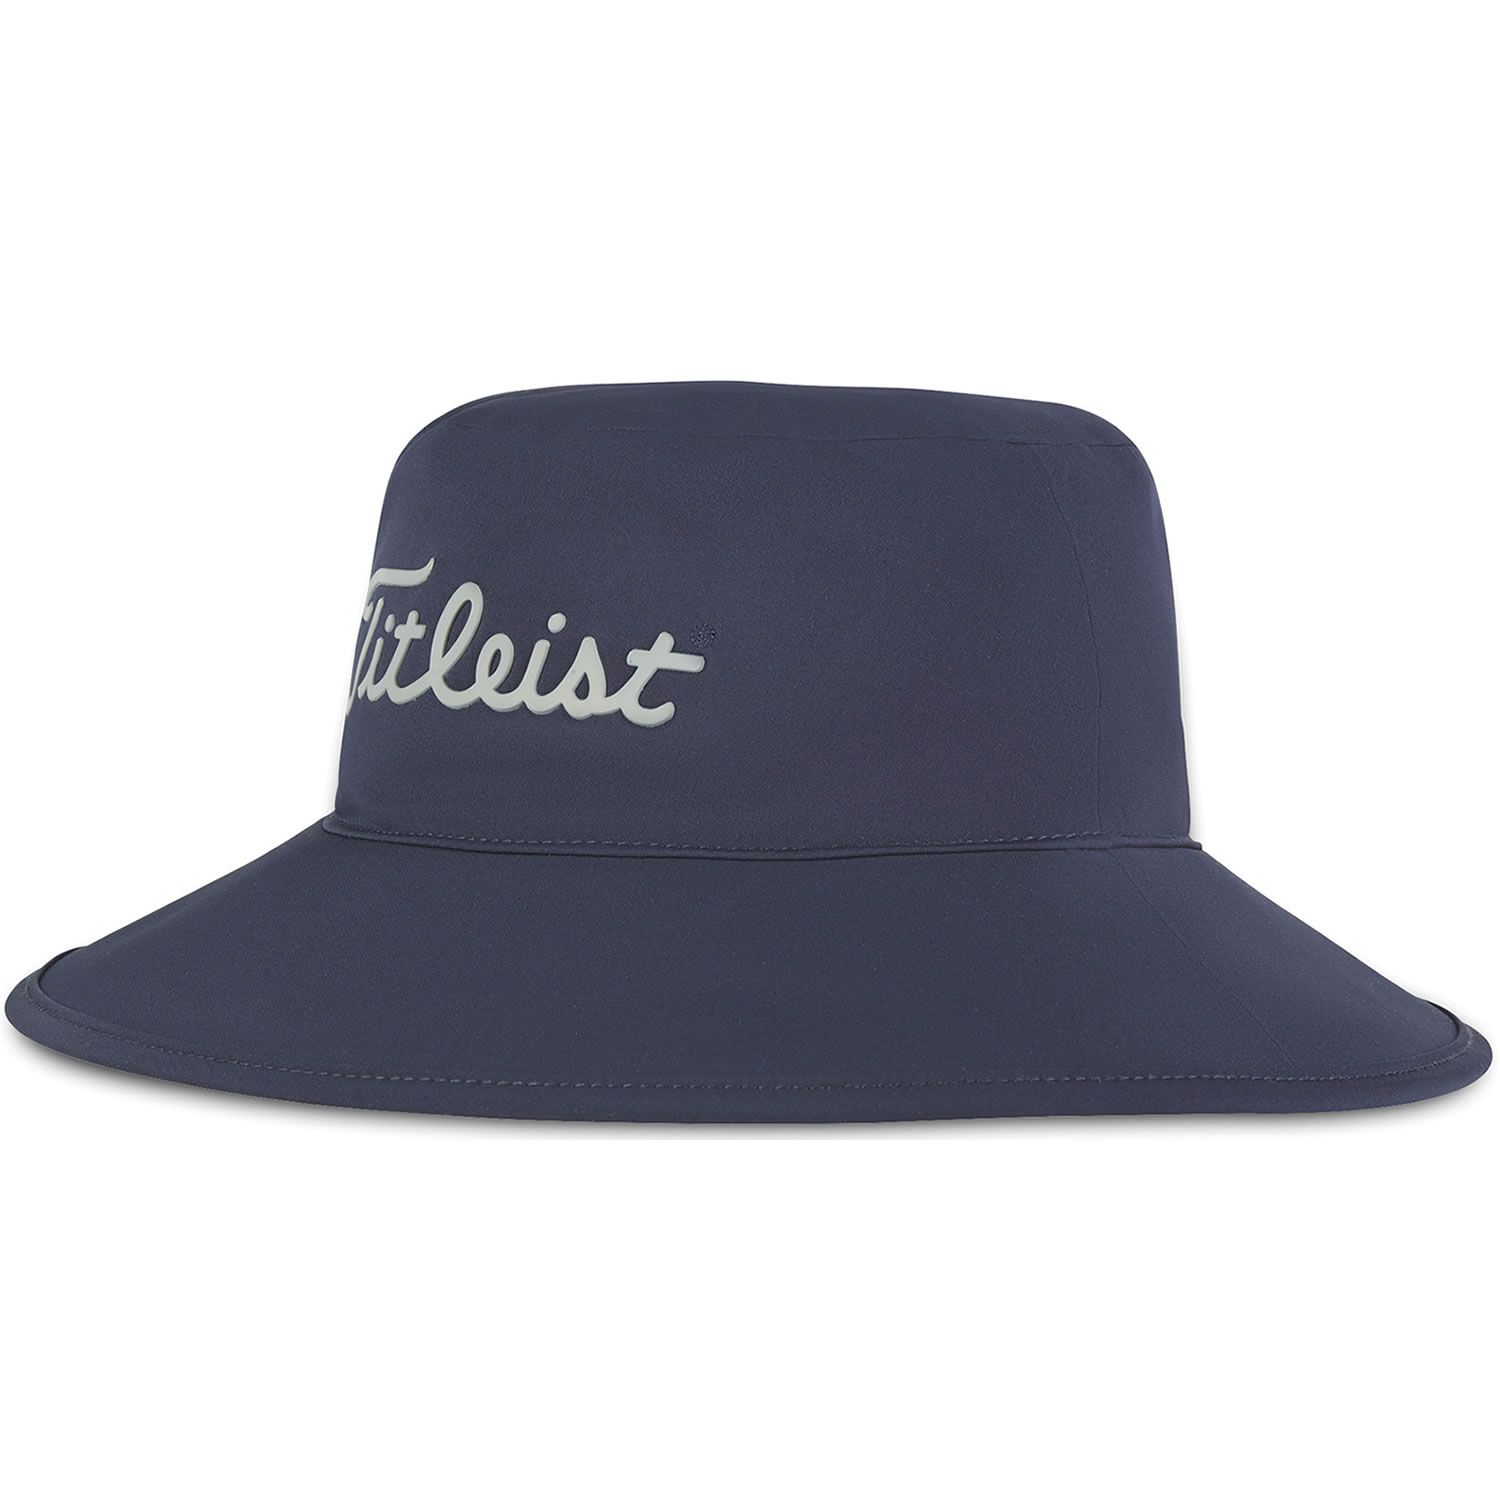 Titleist StaDry Waterproof Golf Bucket Hat